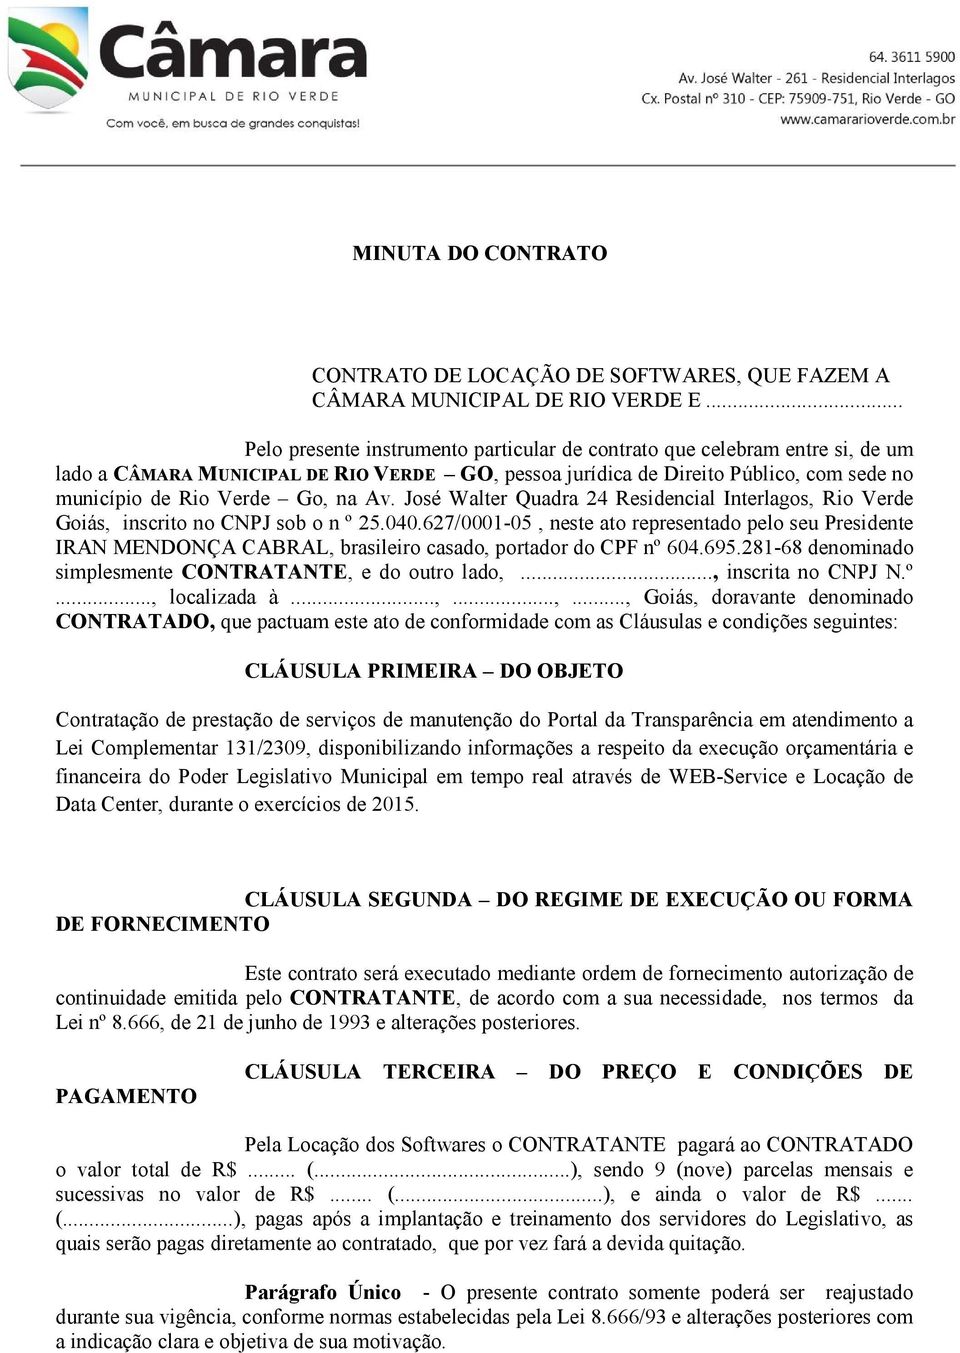 Av. José Walter Quadra 24 Residencial Interlagos, Rio Verde Goiás, inscrito no CNPJ sob o n º 25.040.